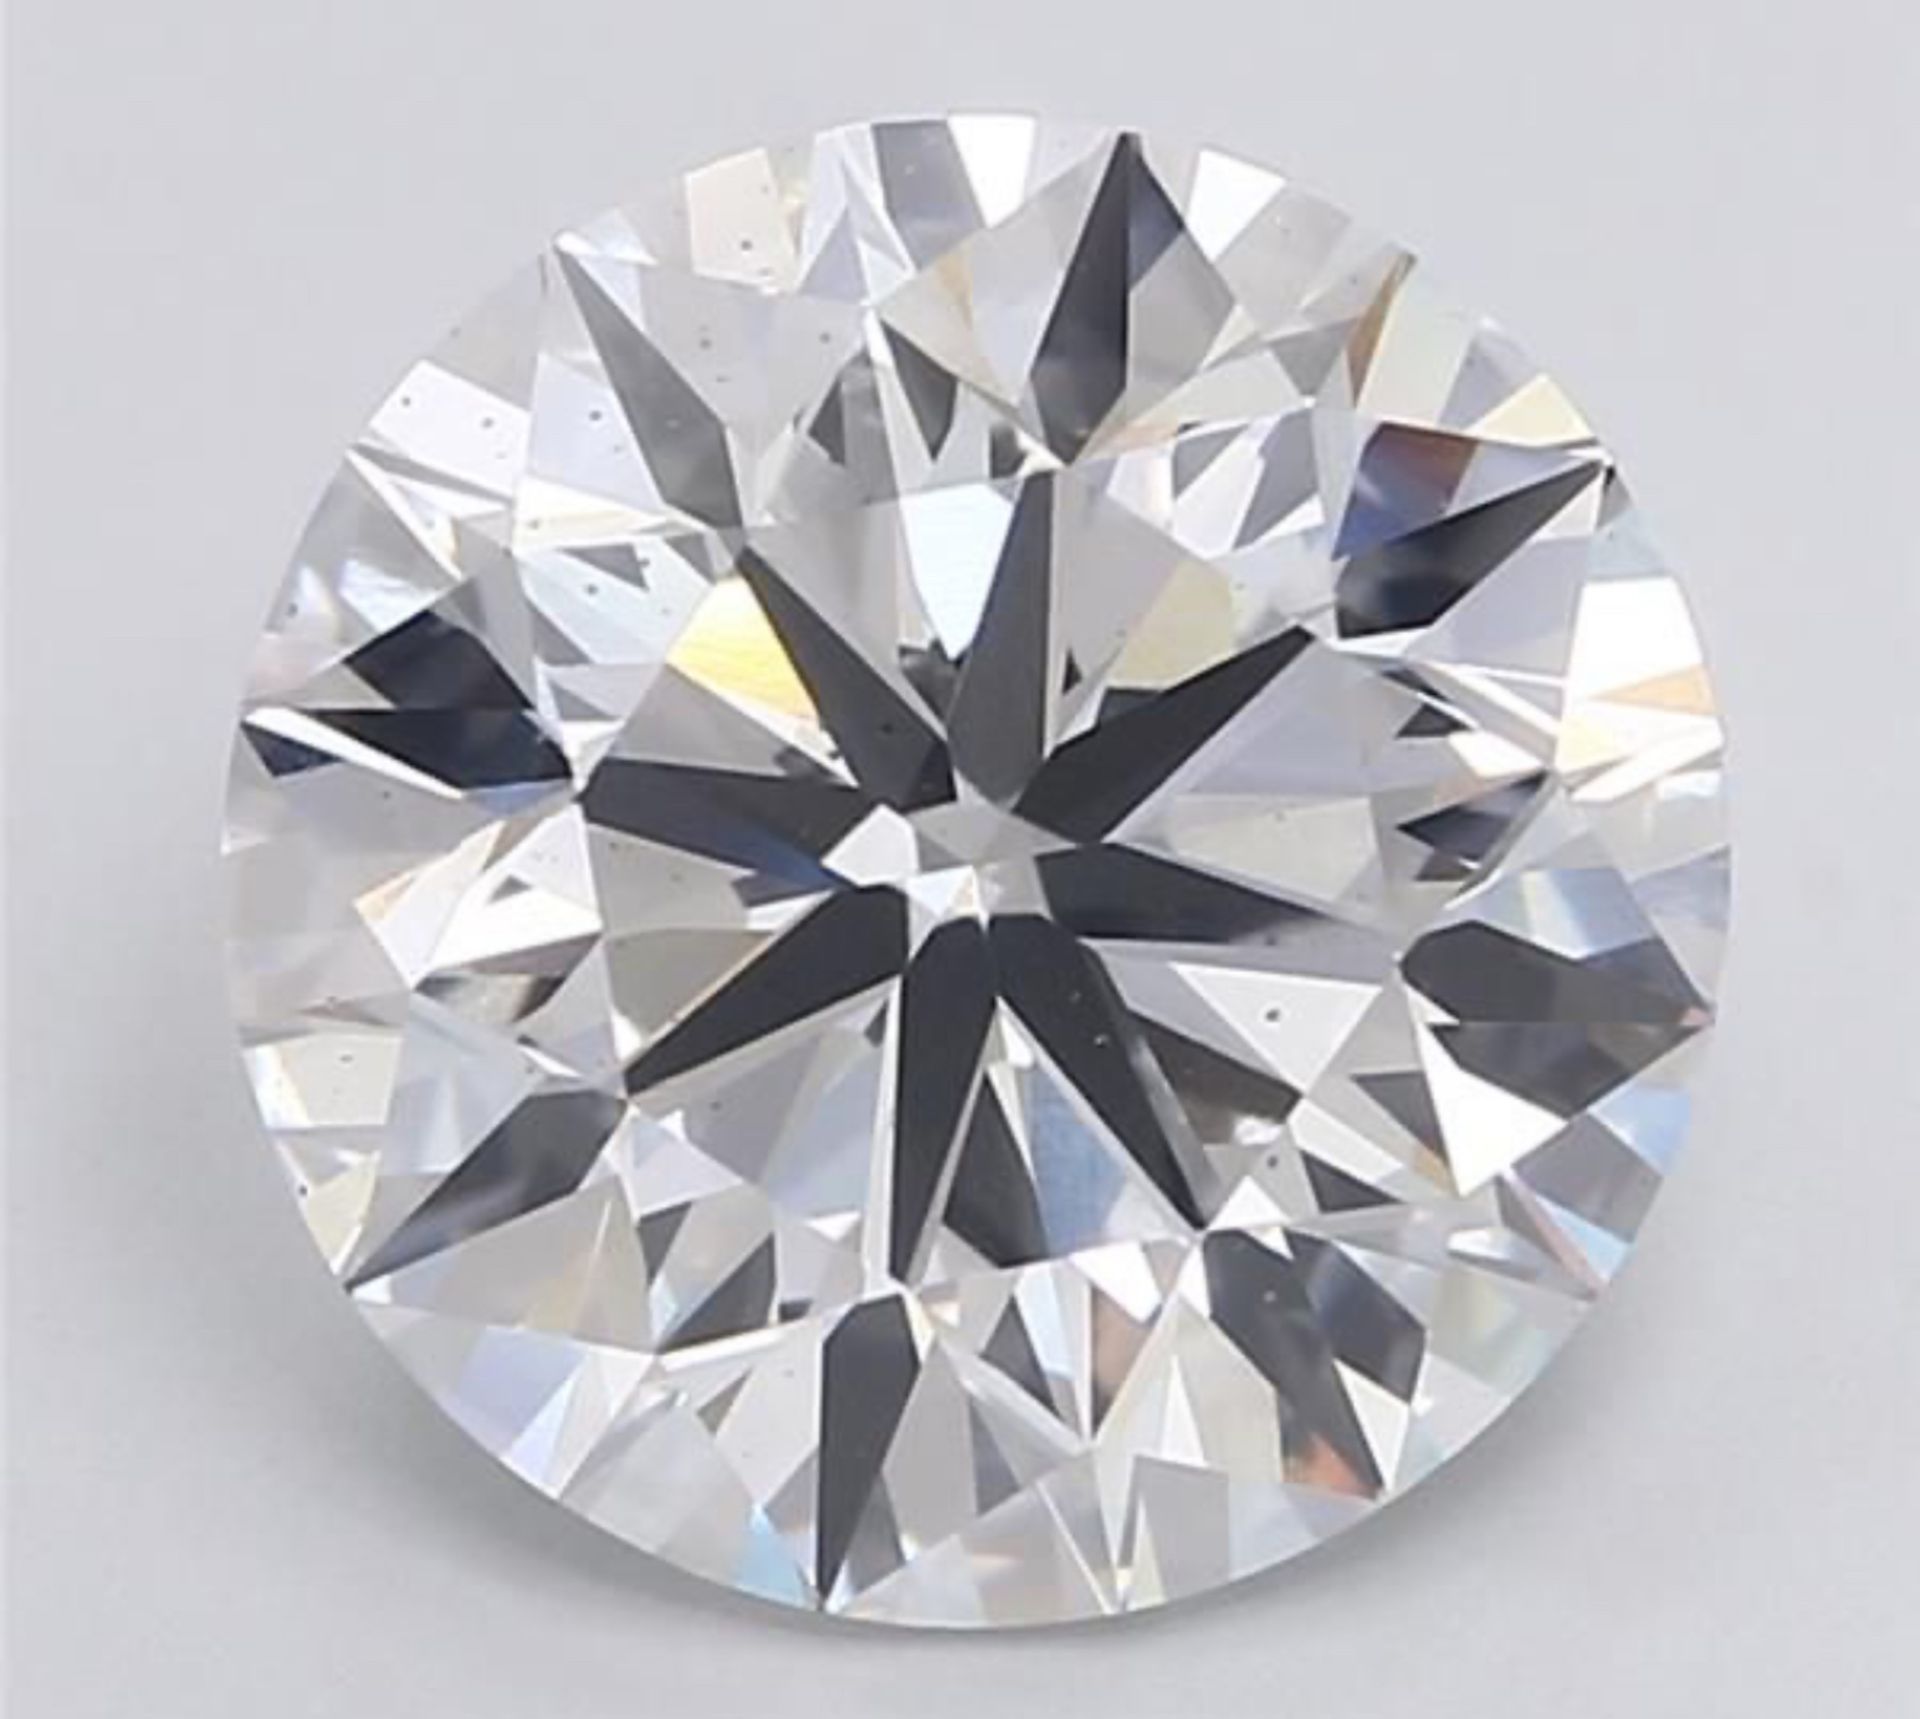 ** ON SALE ** Round Brilliant Cut Diamond 1.00 Carat D Colour VVS1 Clarity - IGI Certificate - Image 5 of 6